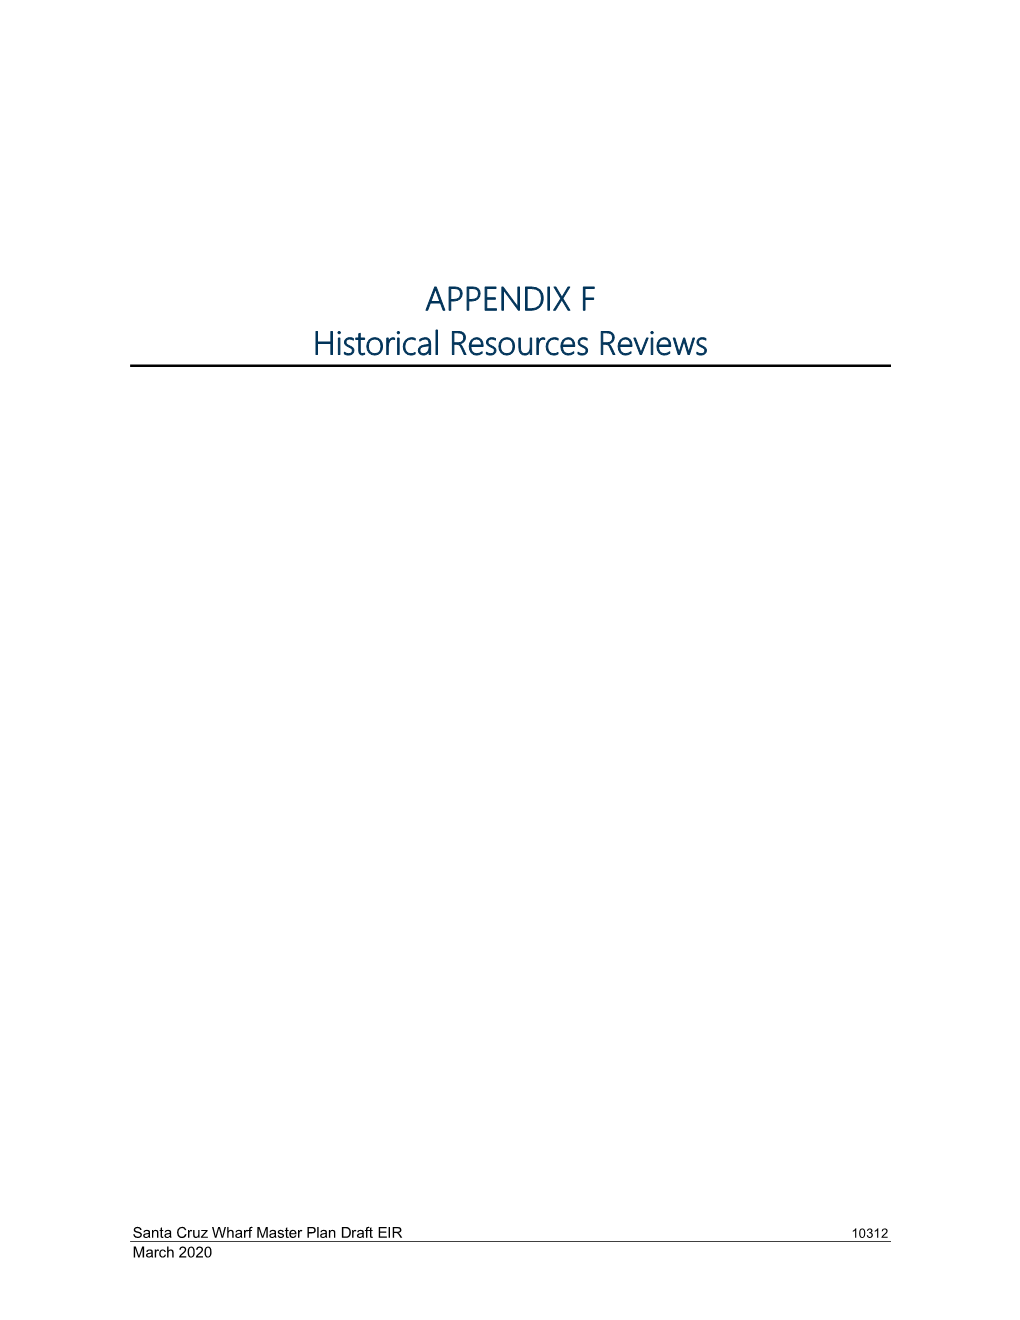 APPENDIX F Historical Resources Reviews